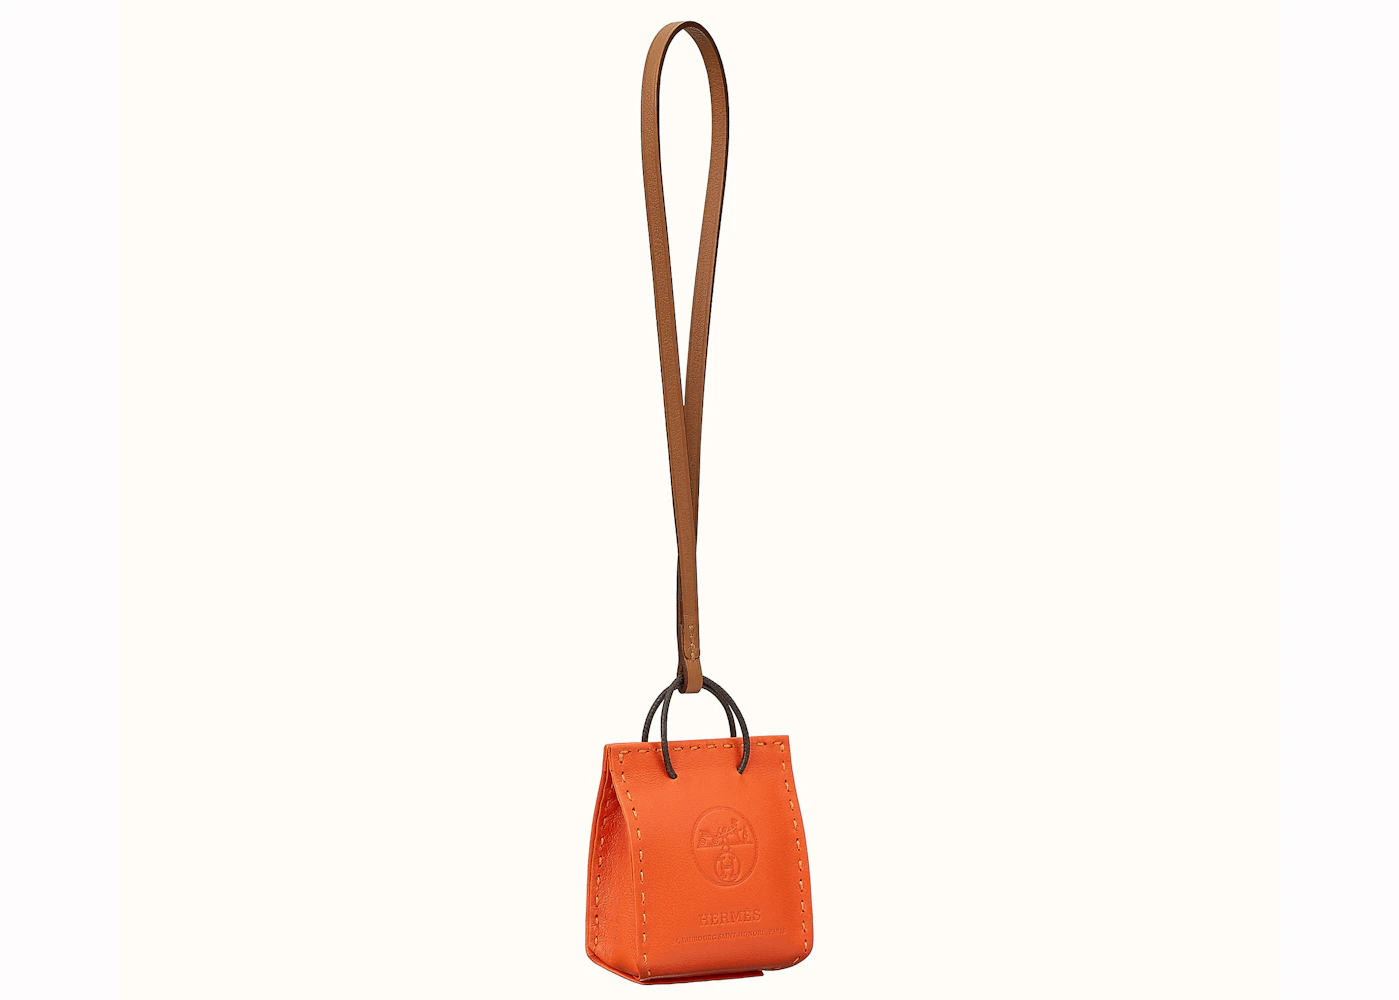 Hermes Feu Milo Gold Swift Mini Shopping Bag Charm - The Tanpopo Room